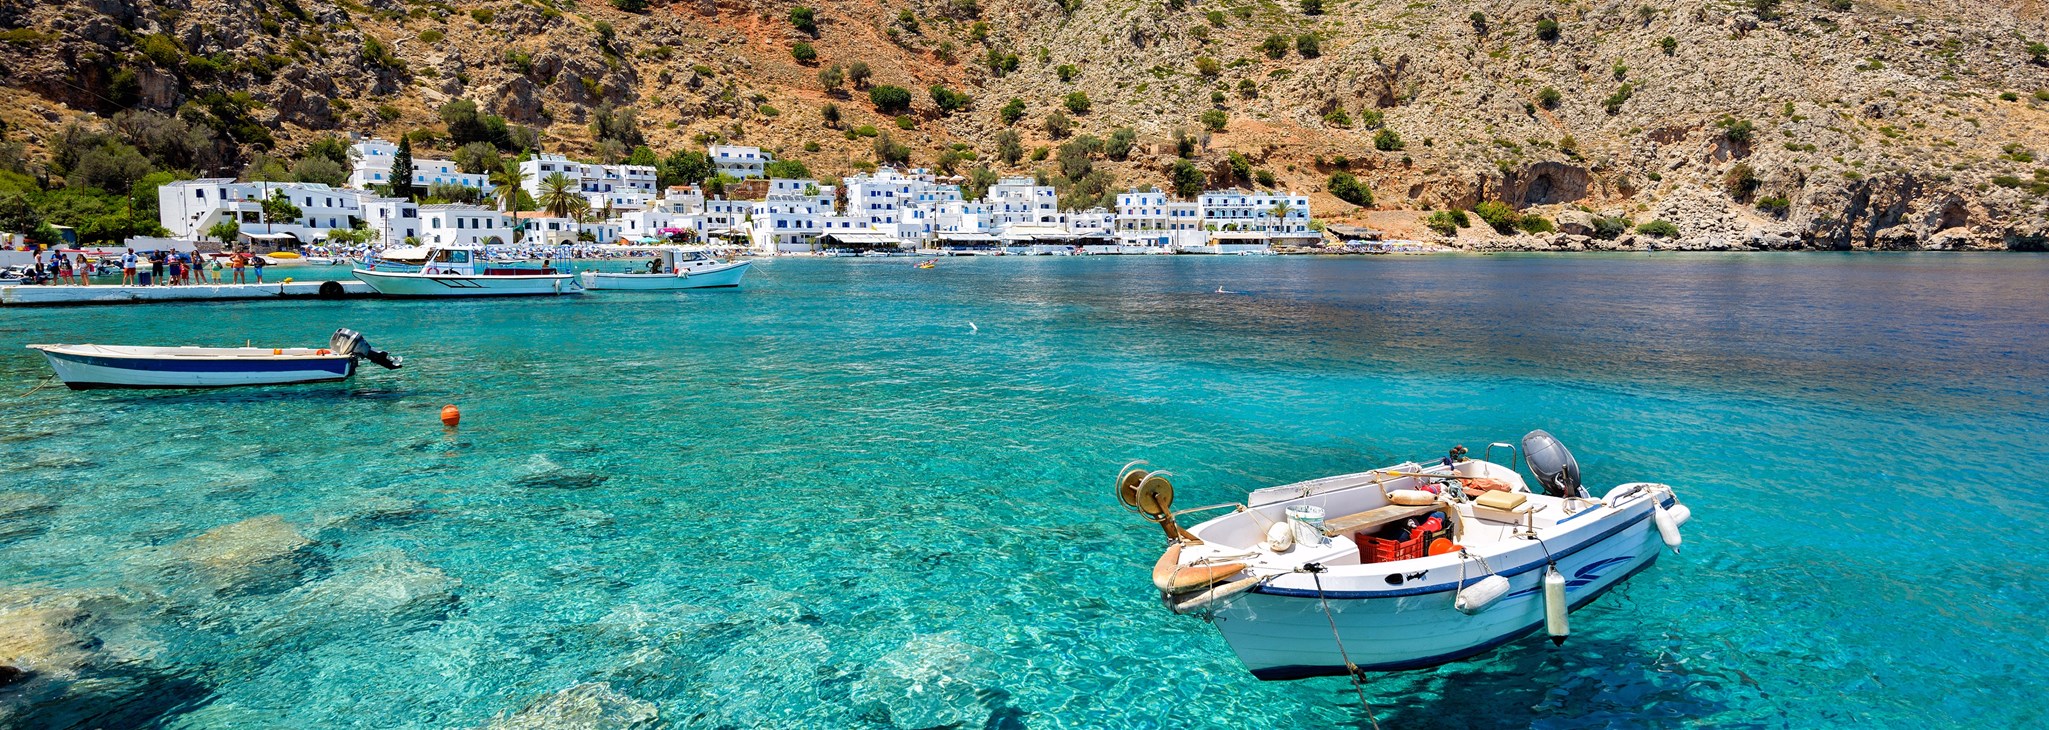 promo voyage crete